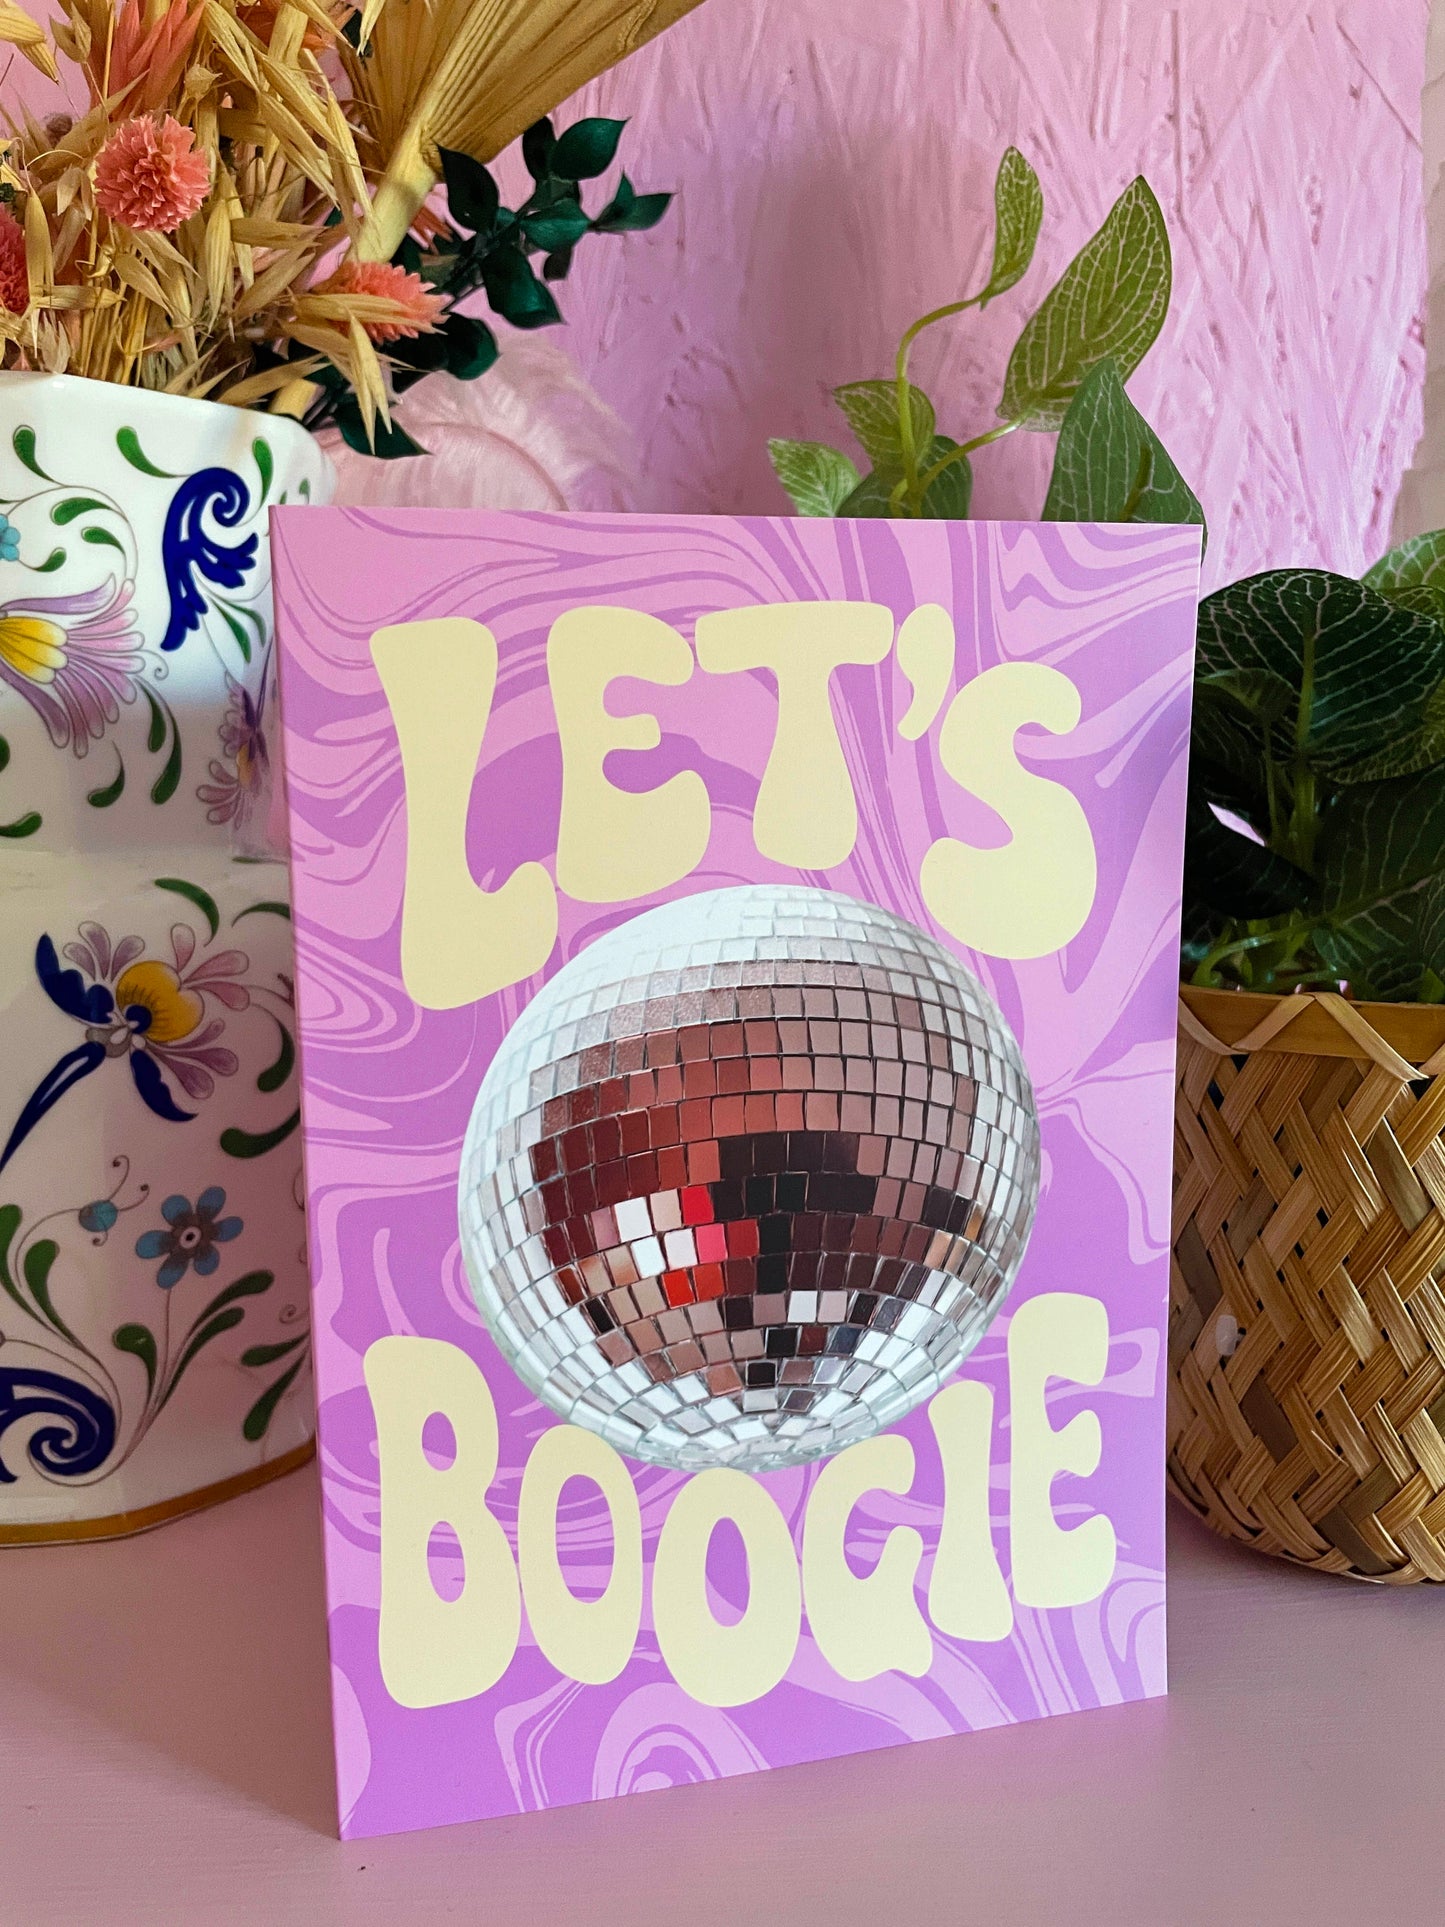 Let's Boogie Greeting Card - PrintedWeird